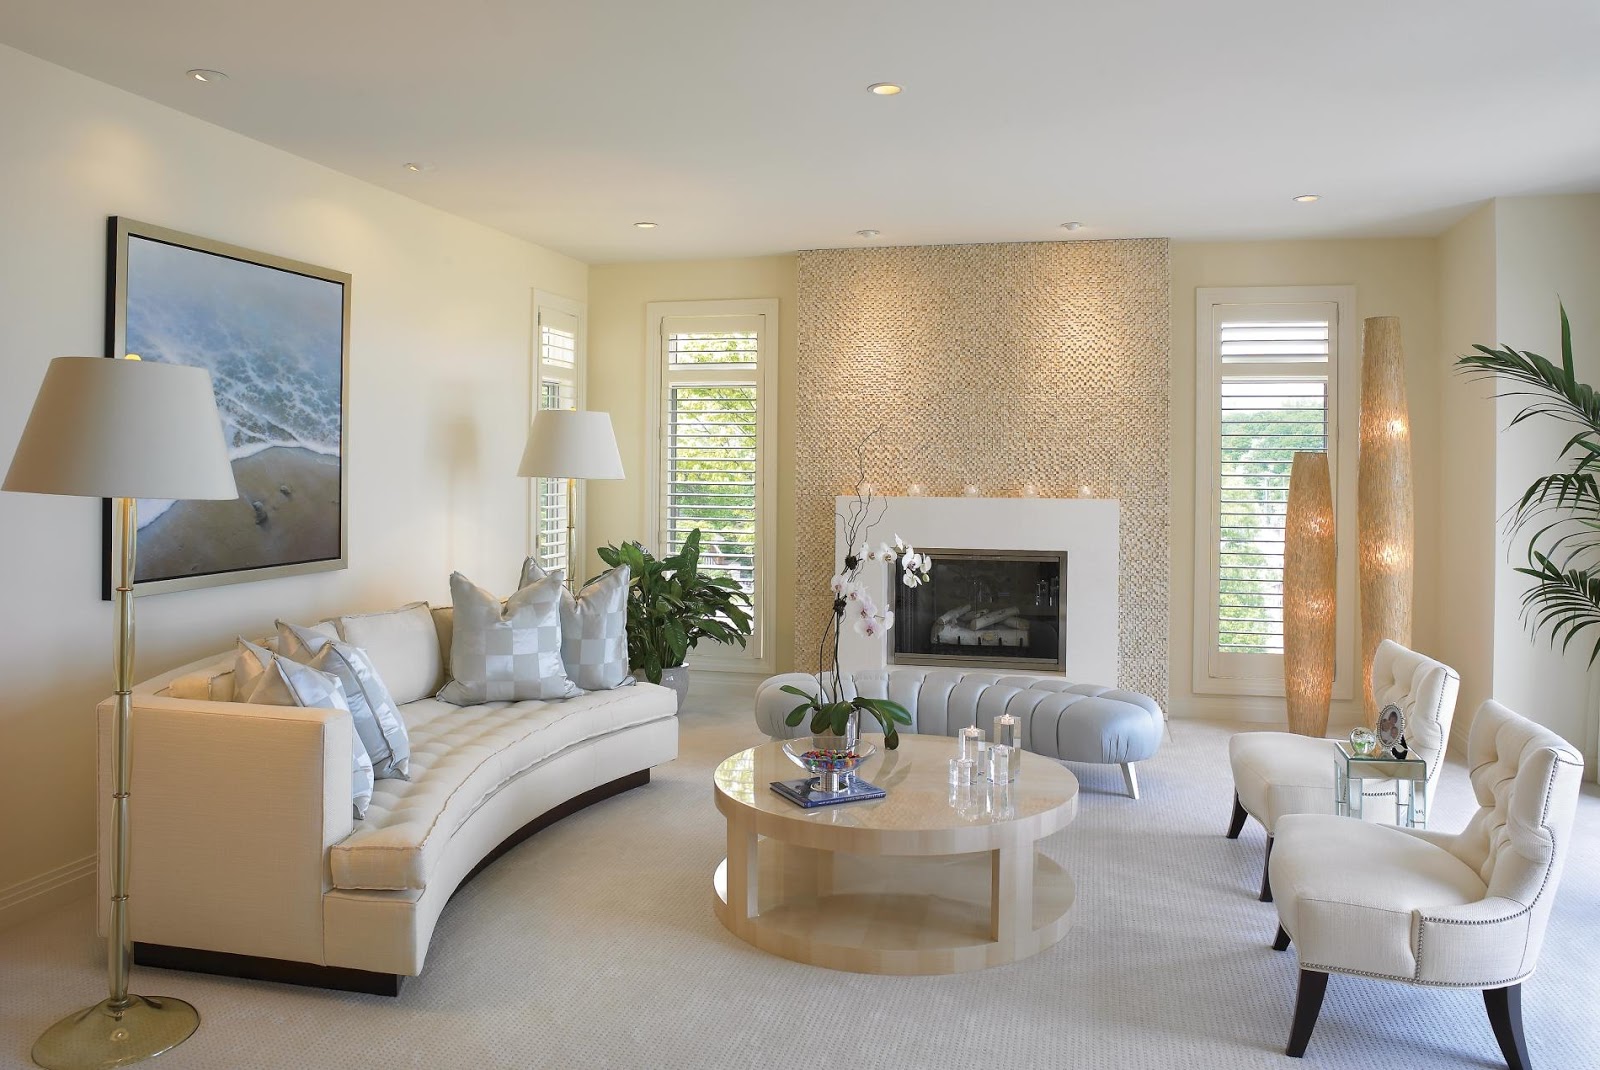 Decorative Design Ideas For Living Rooms - Dream House